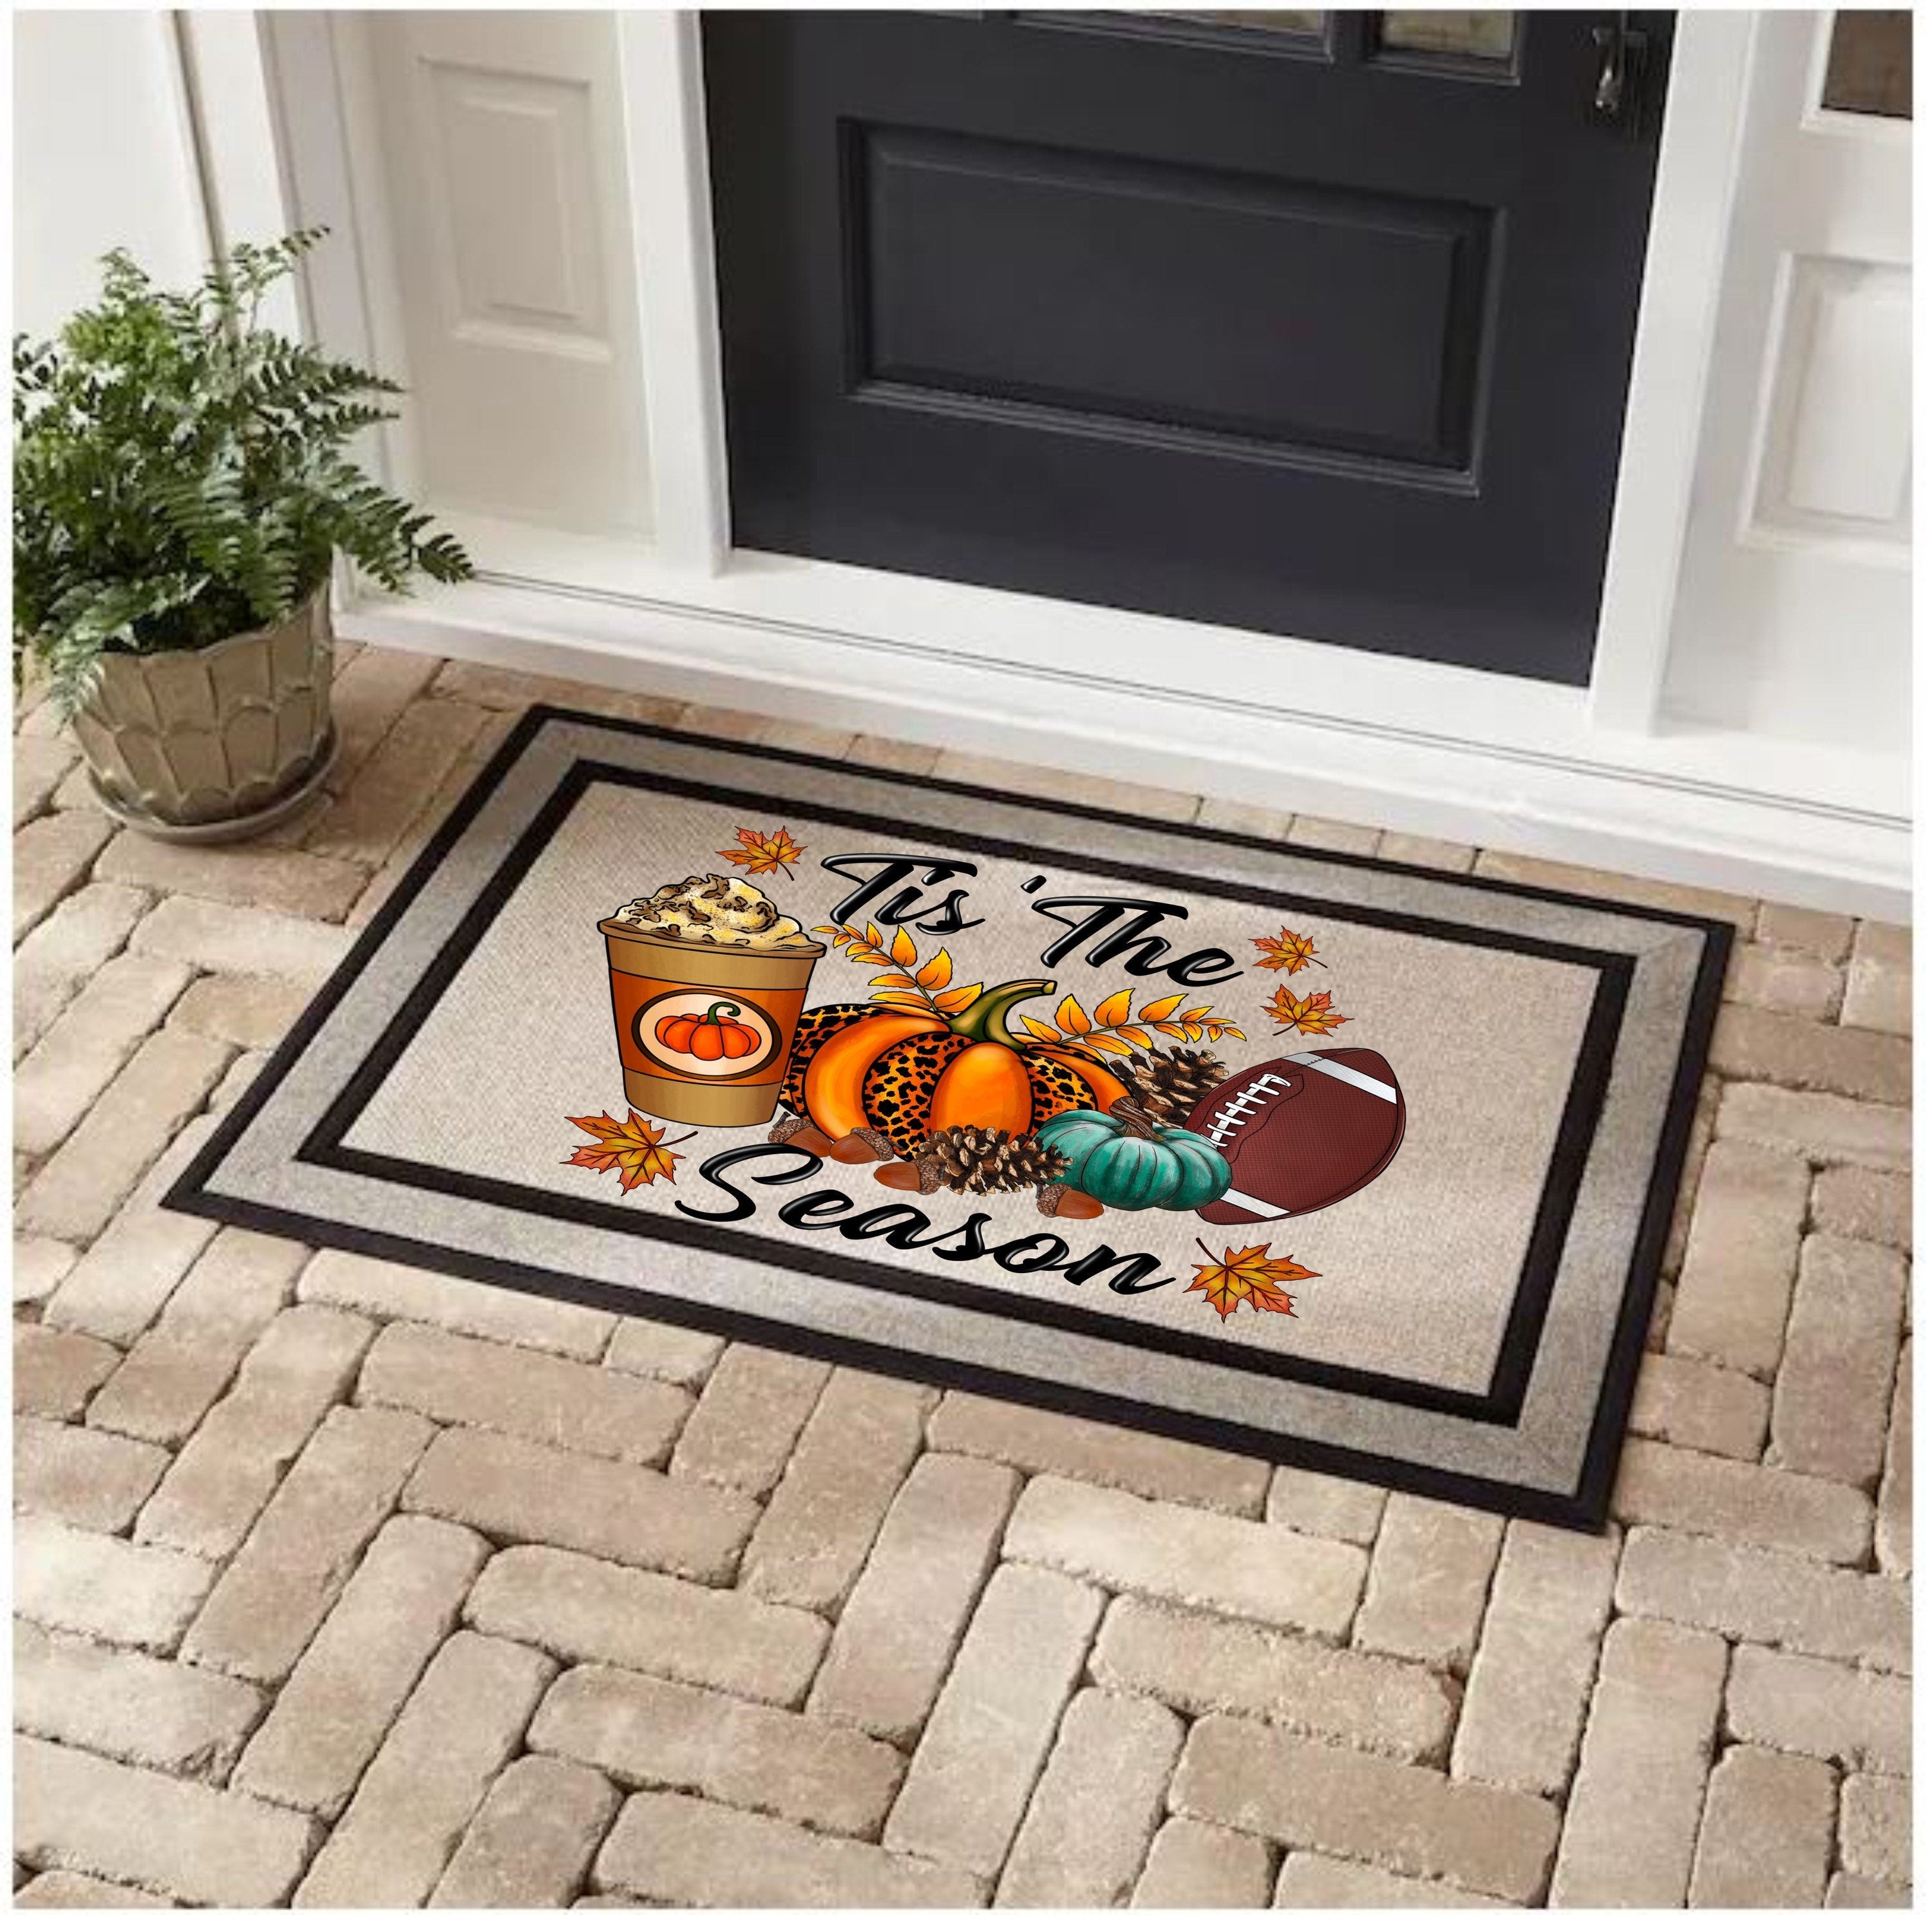 Tis' The Season Doormat